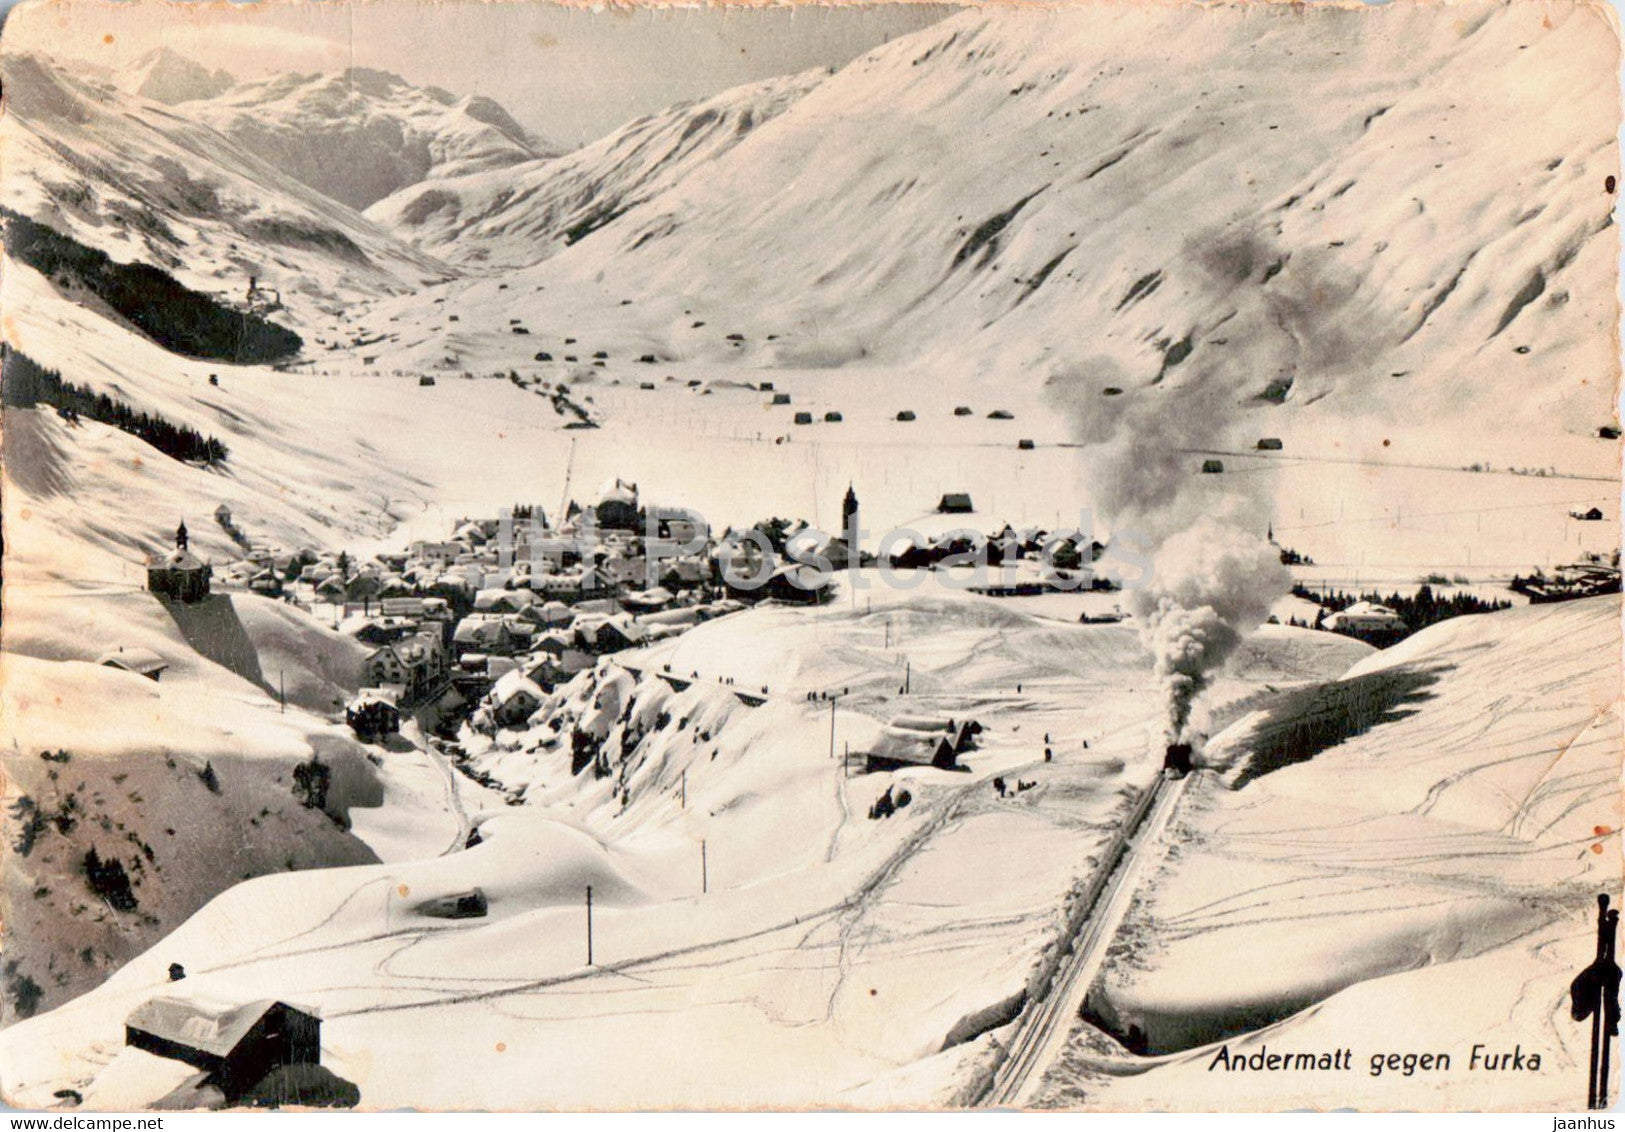 Andermatt gegen Furka - railway - train - 3130 - old postcard - Switzerland - used - JH Postcards